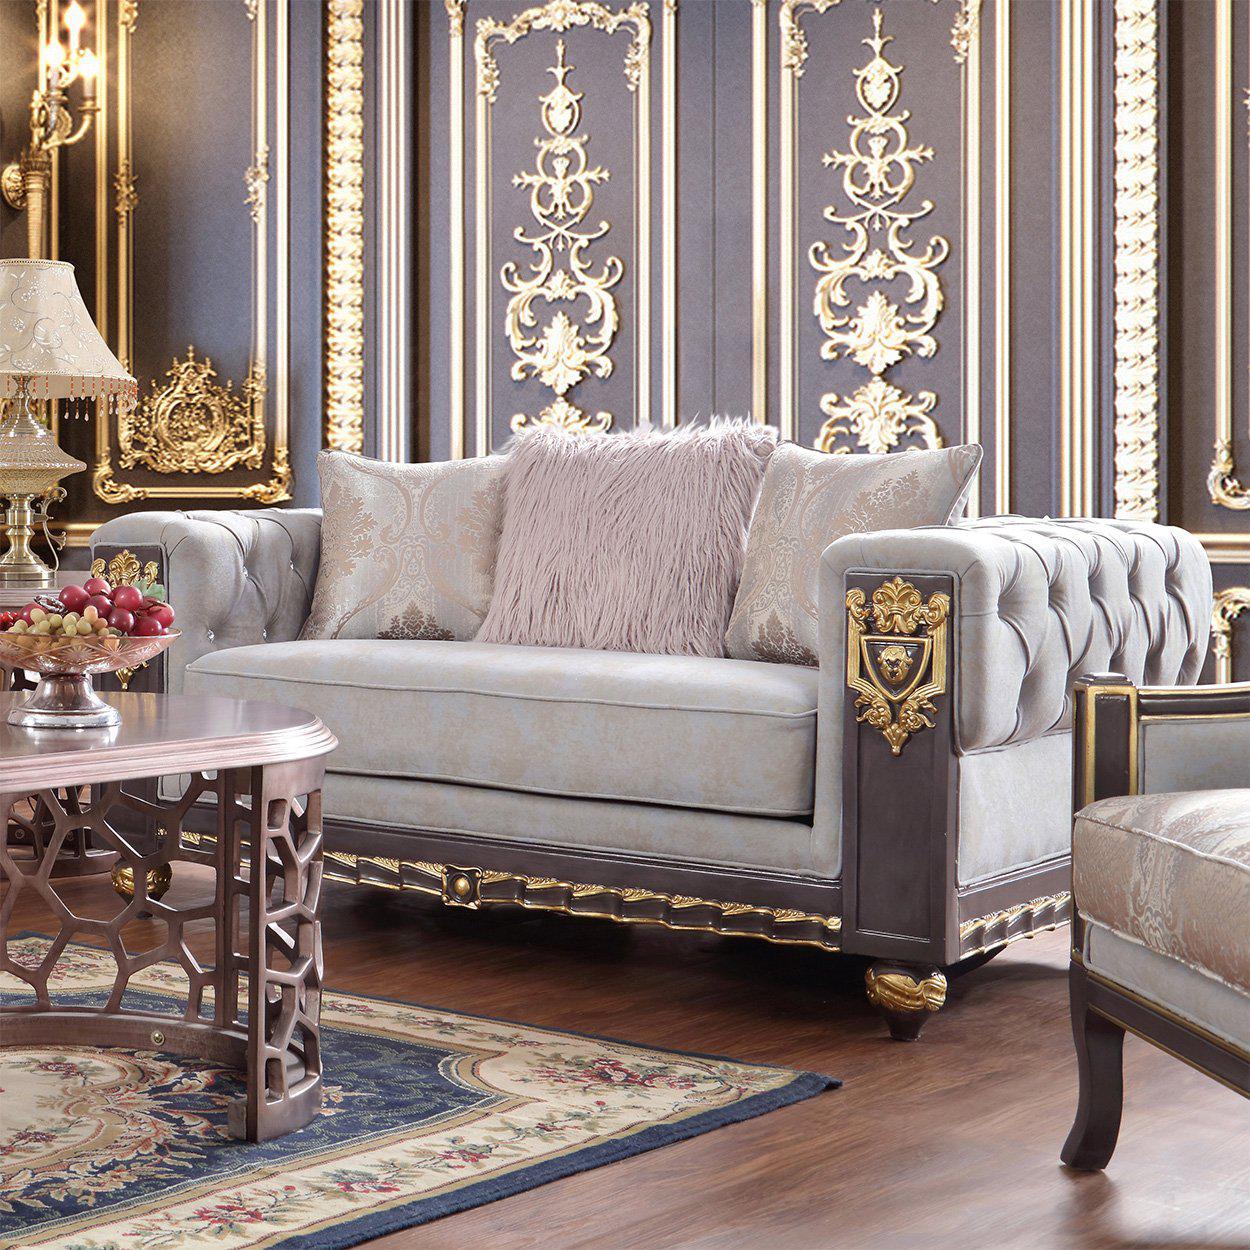 Homey Design Luxury Hd-6030 - 3Pc Sofa Set-Iron Home Concepts